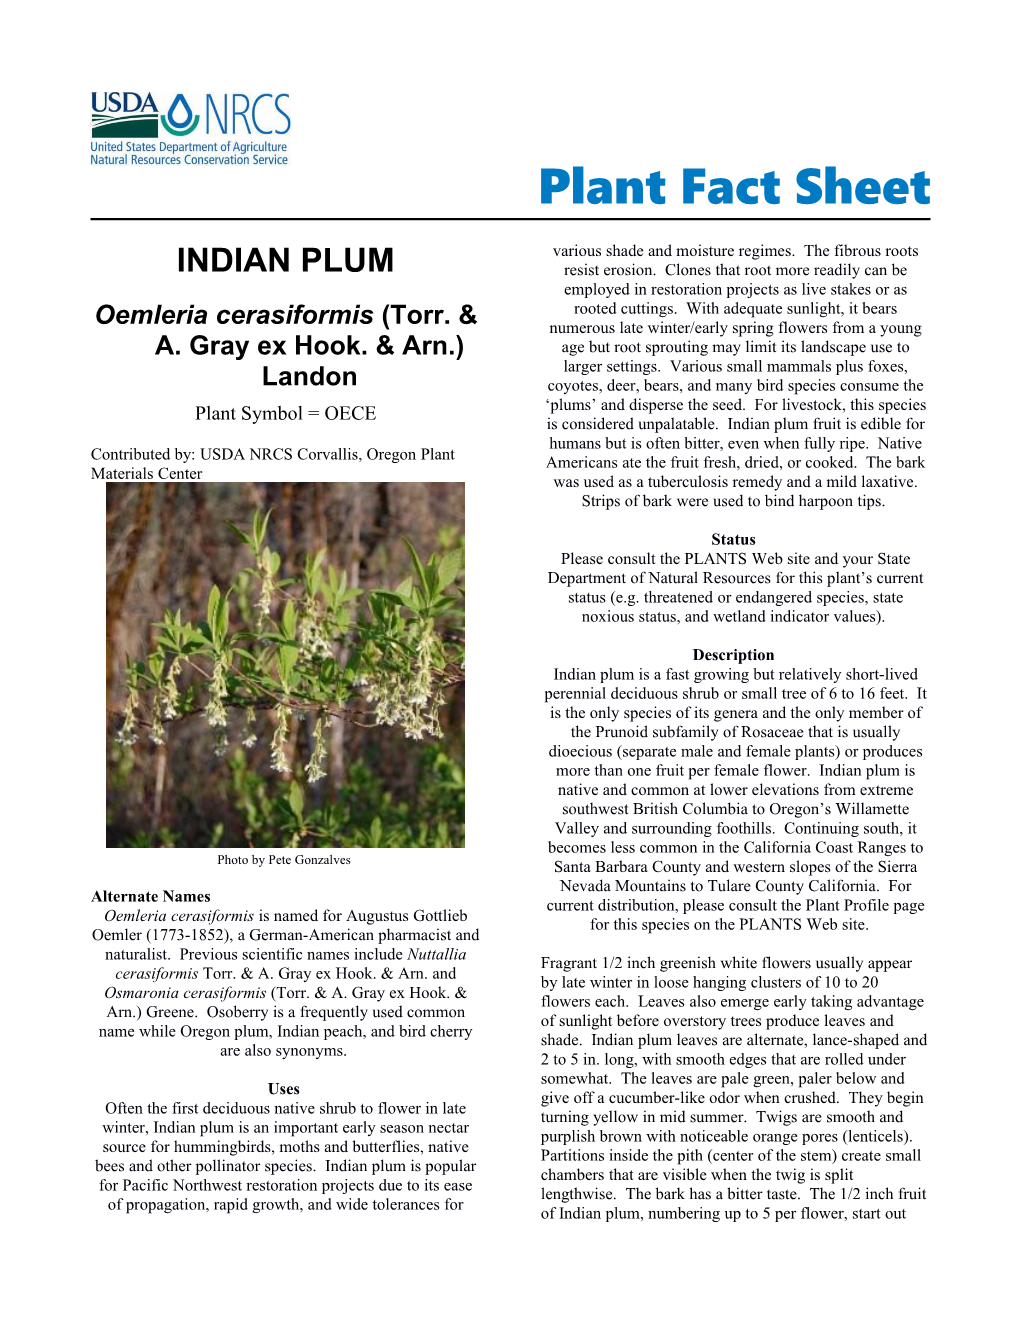 Indian Plum Plant Fact Sheet